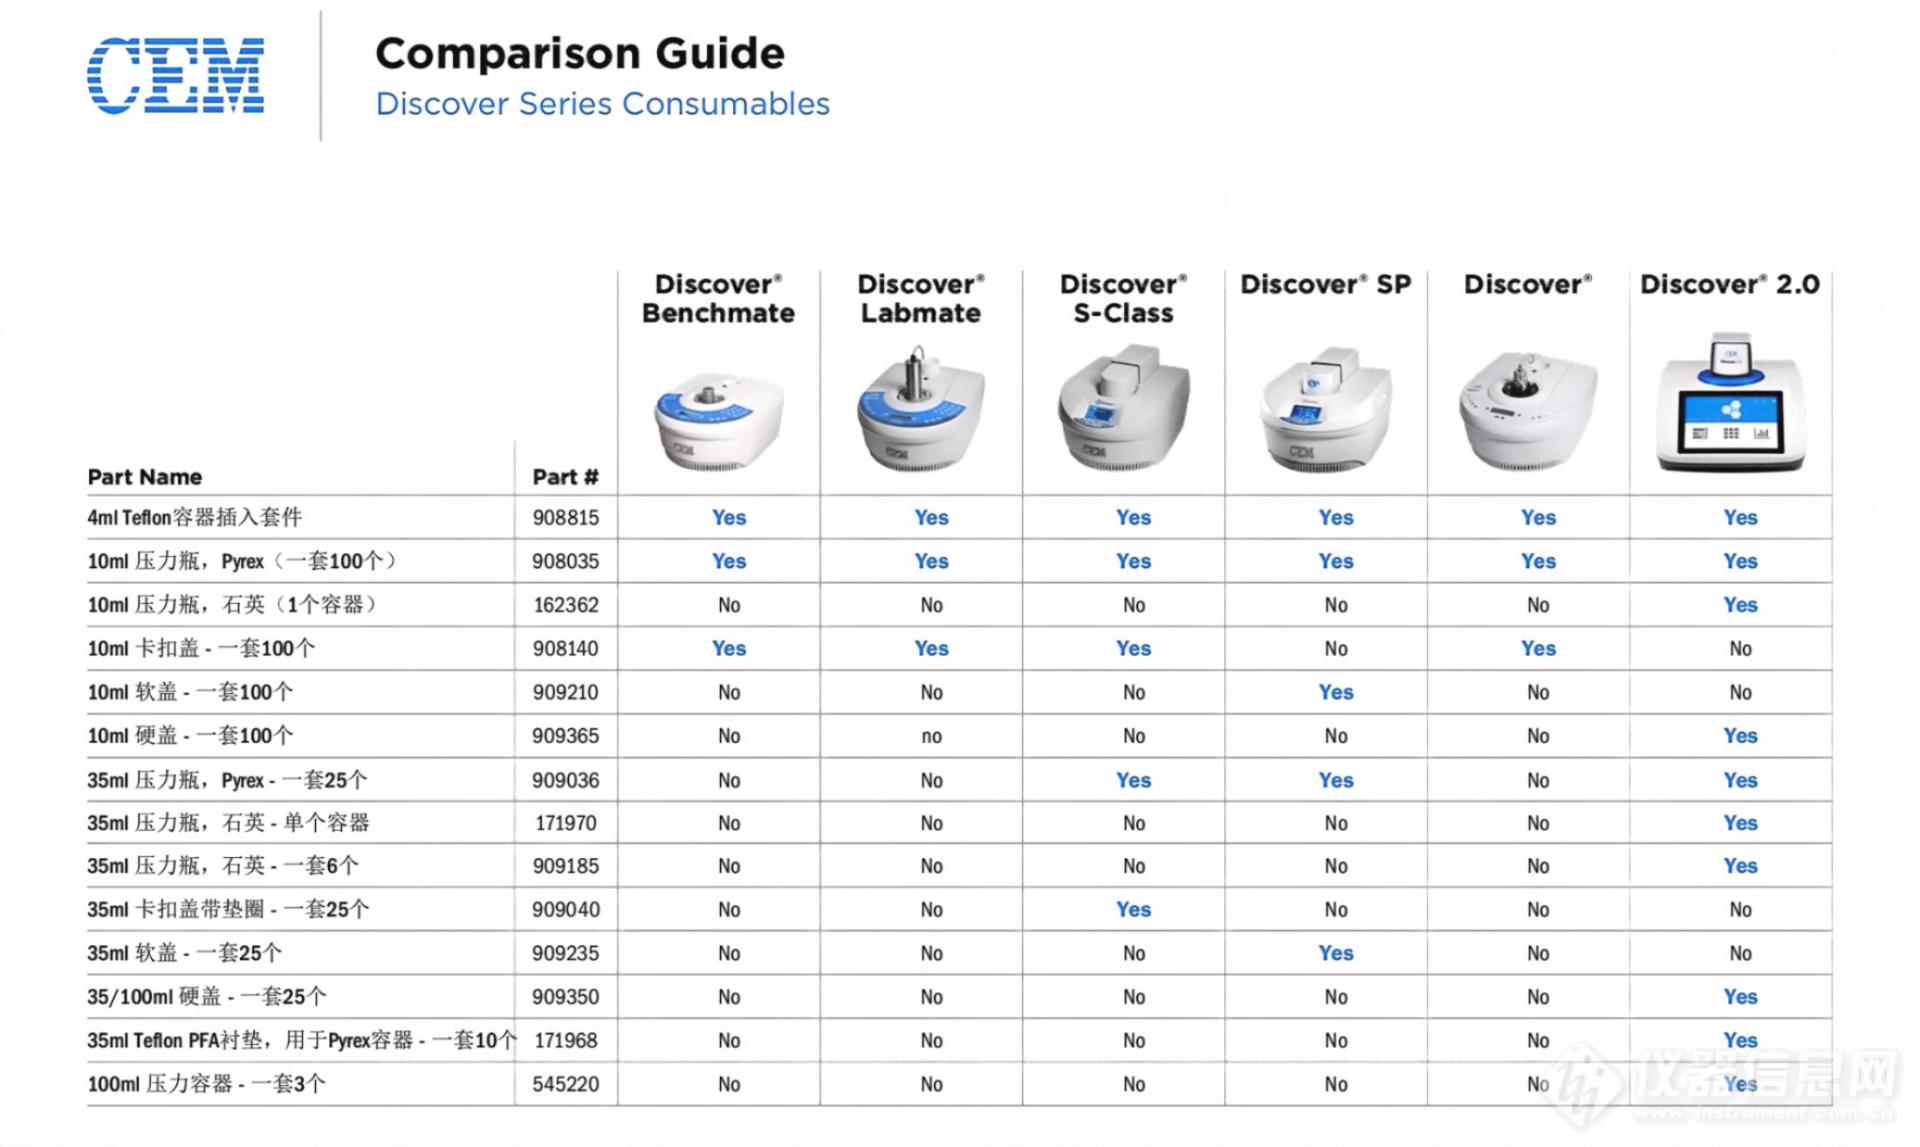 Discover_Consumables_Comparison_Guide_CG010_01.jpg